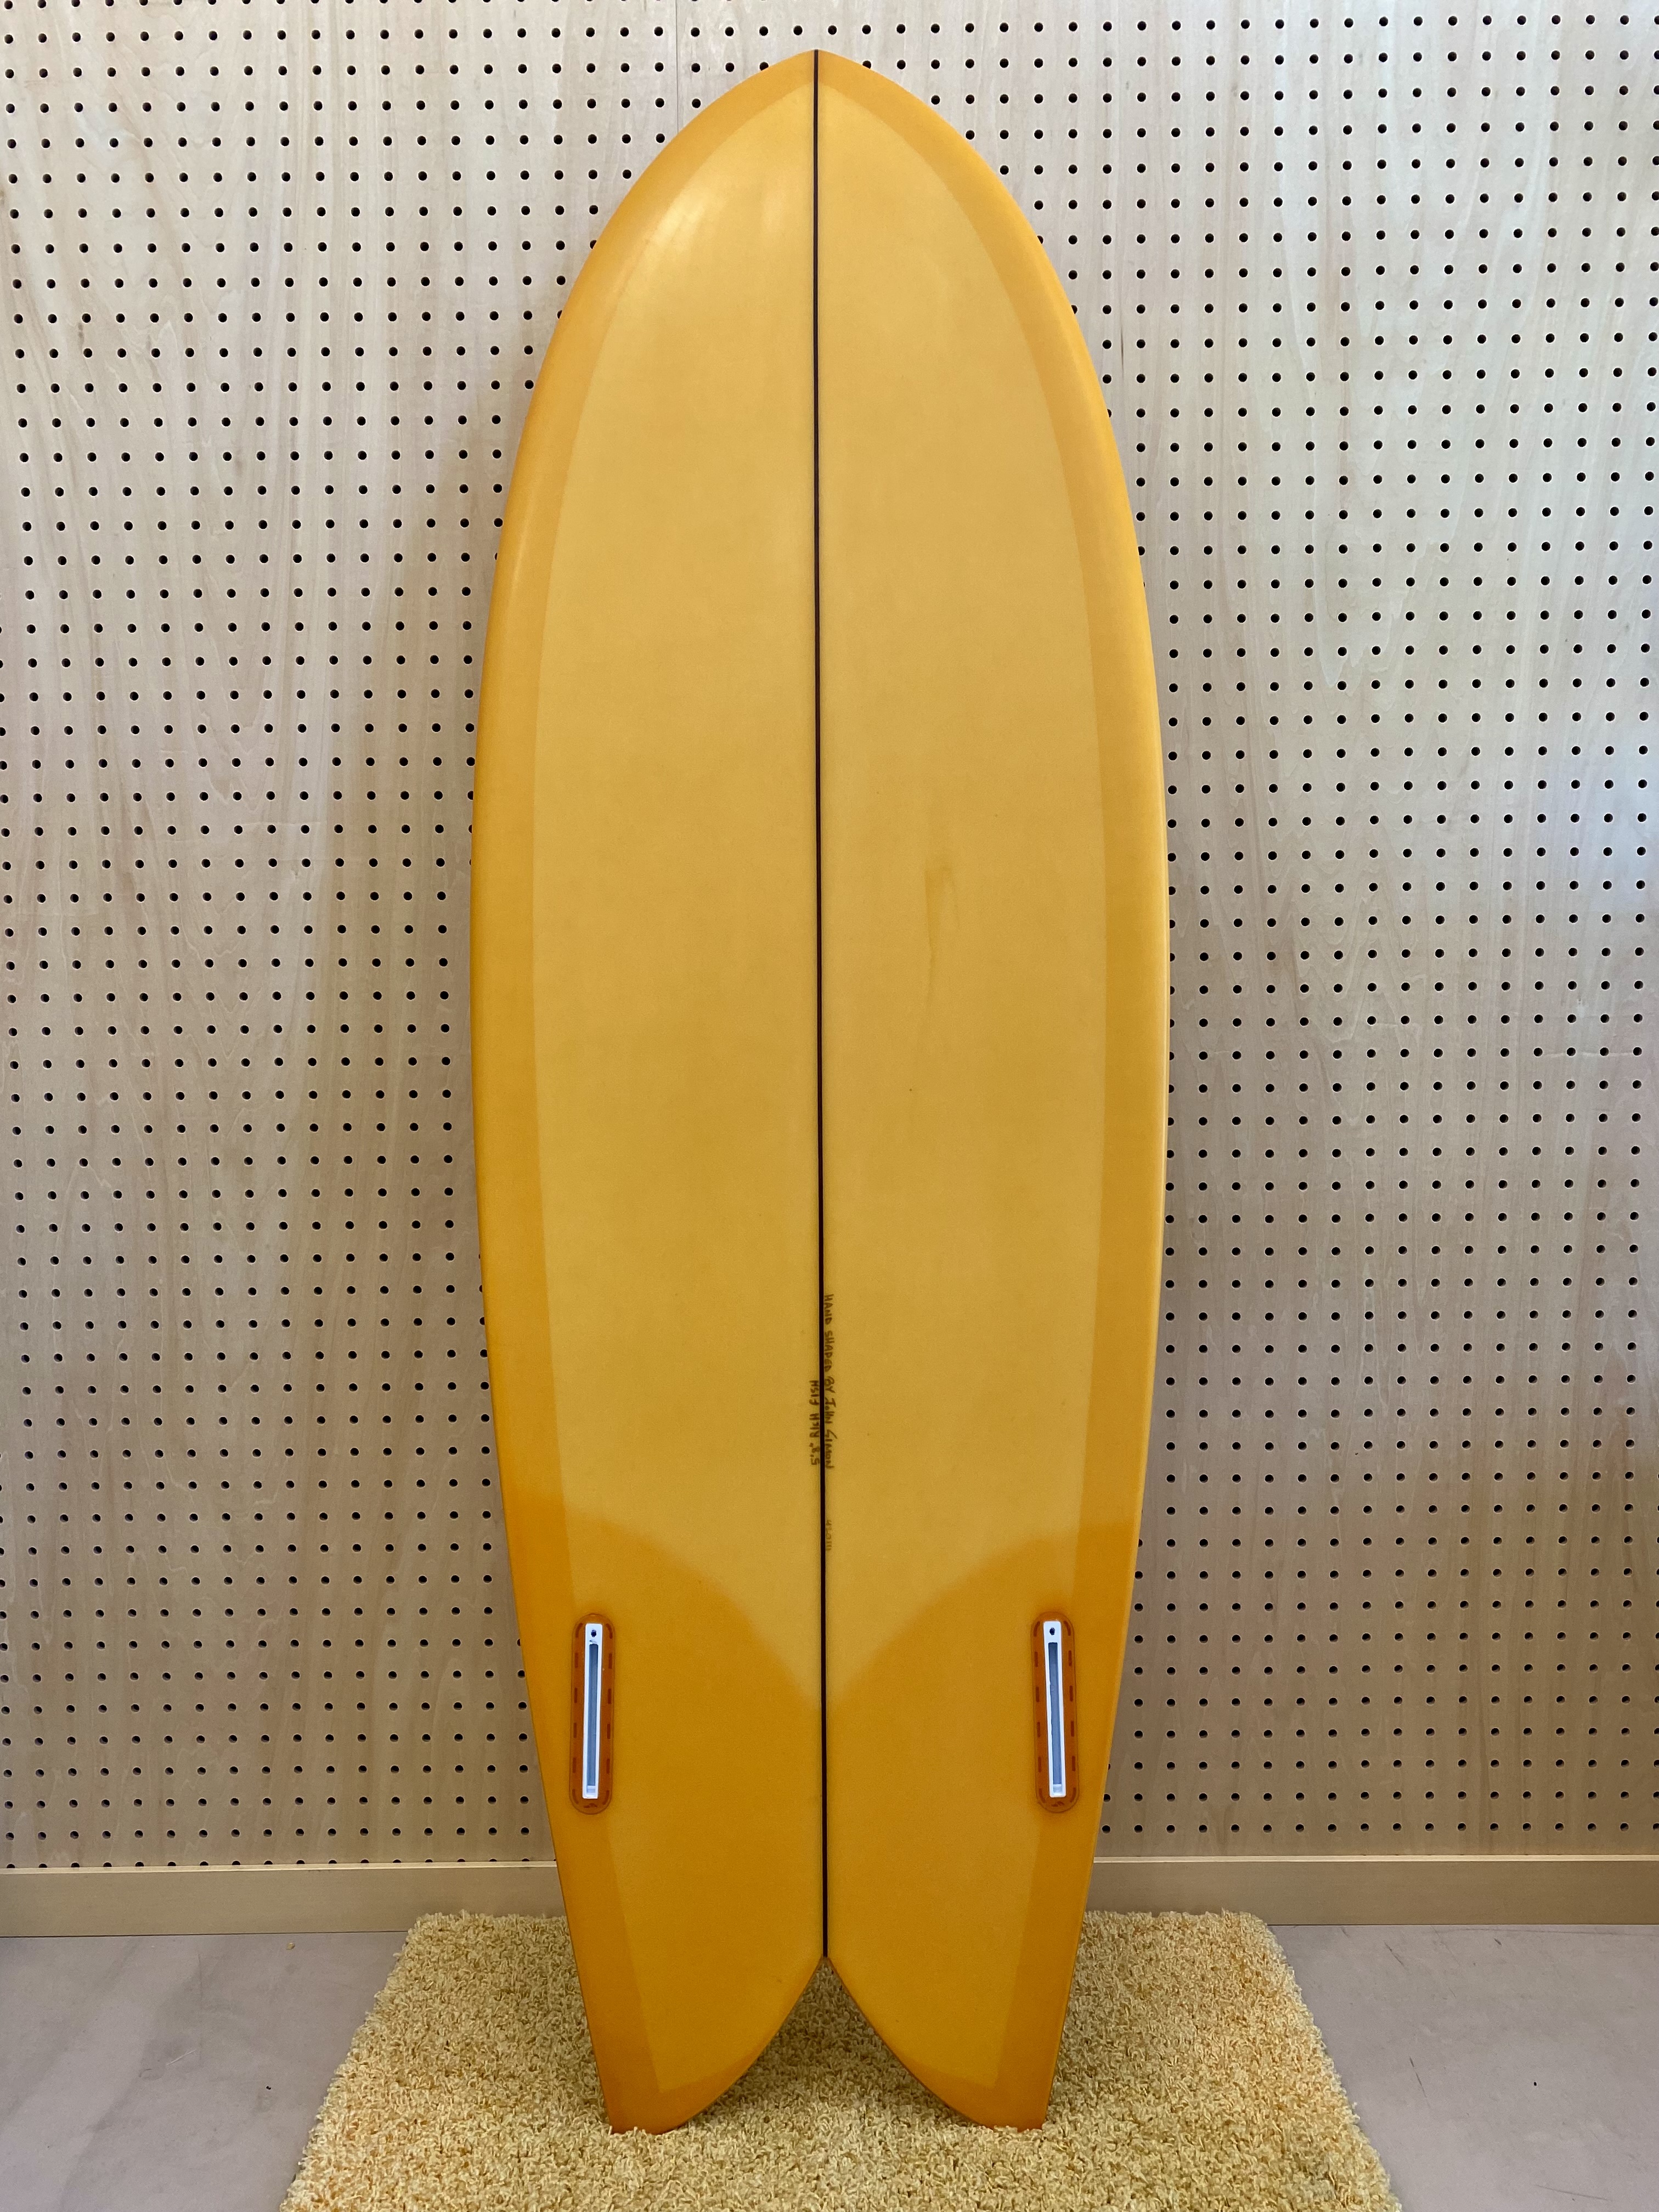 Pavel Fish 5.8 TRIMCRAFT SURFBOARDS|沖縄サーフィンショップ「YES SURF」